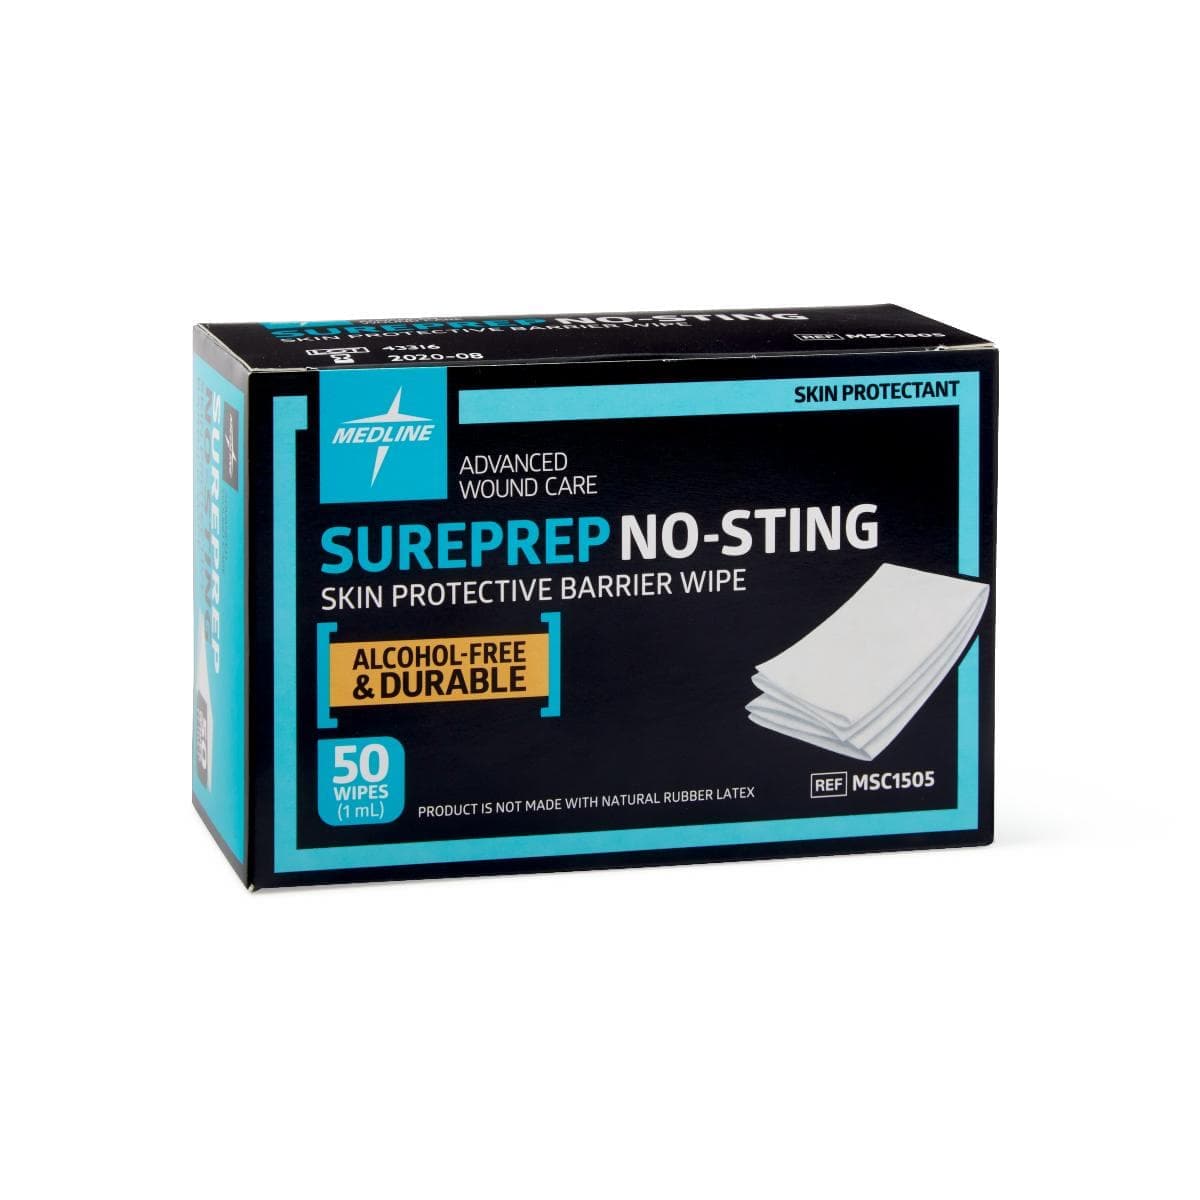 Medline Case of 500 / 1ML Medline Sureprep No-Sting Skin Protectant